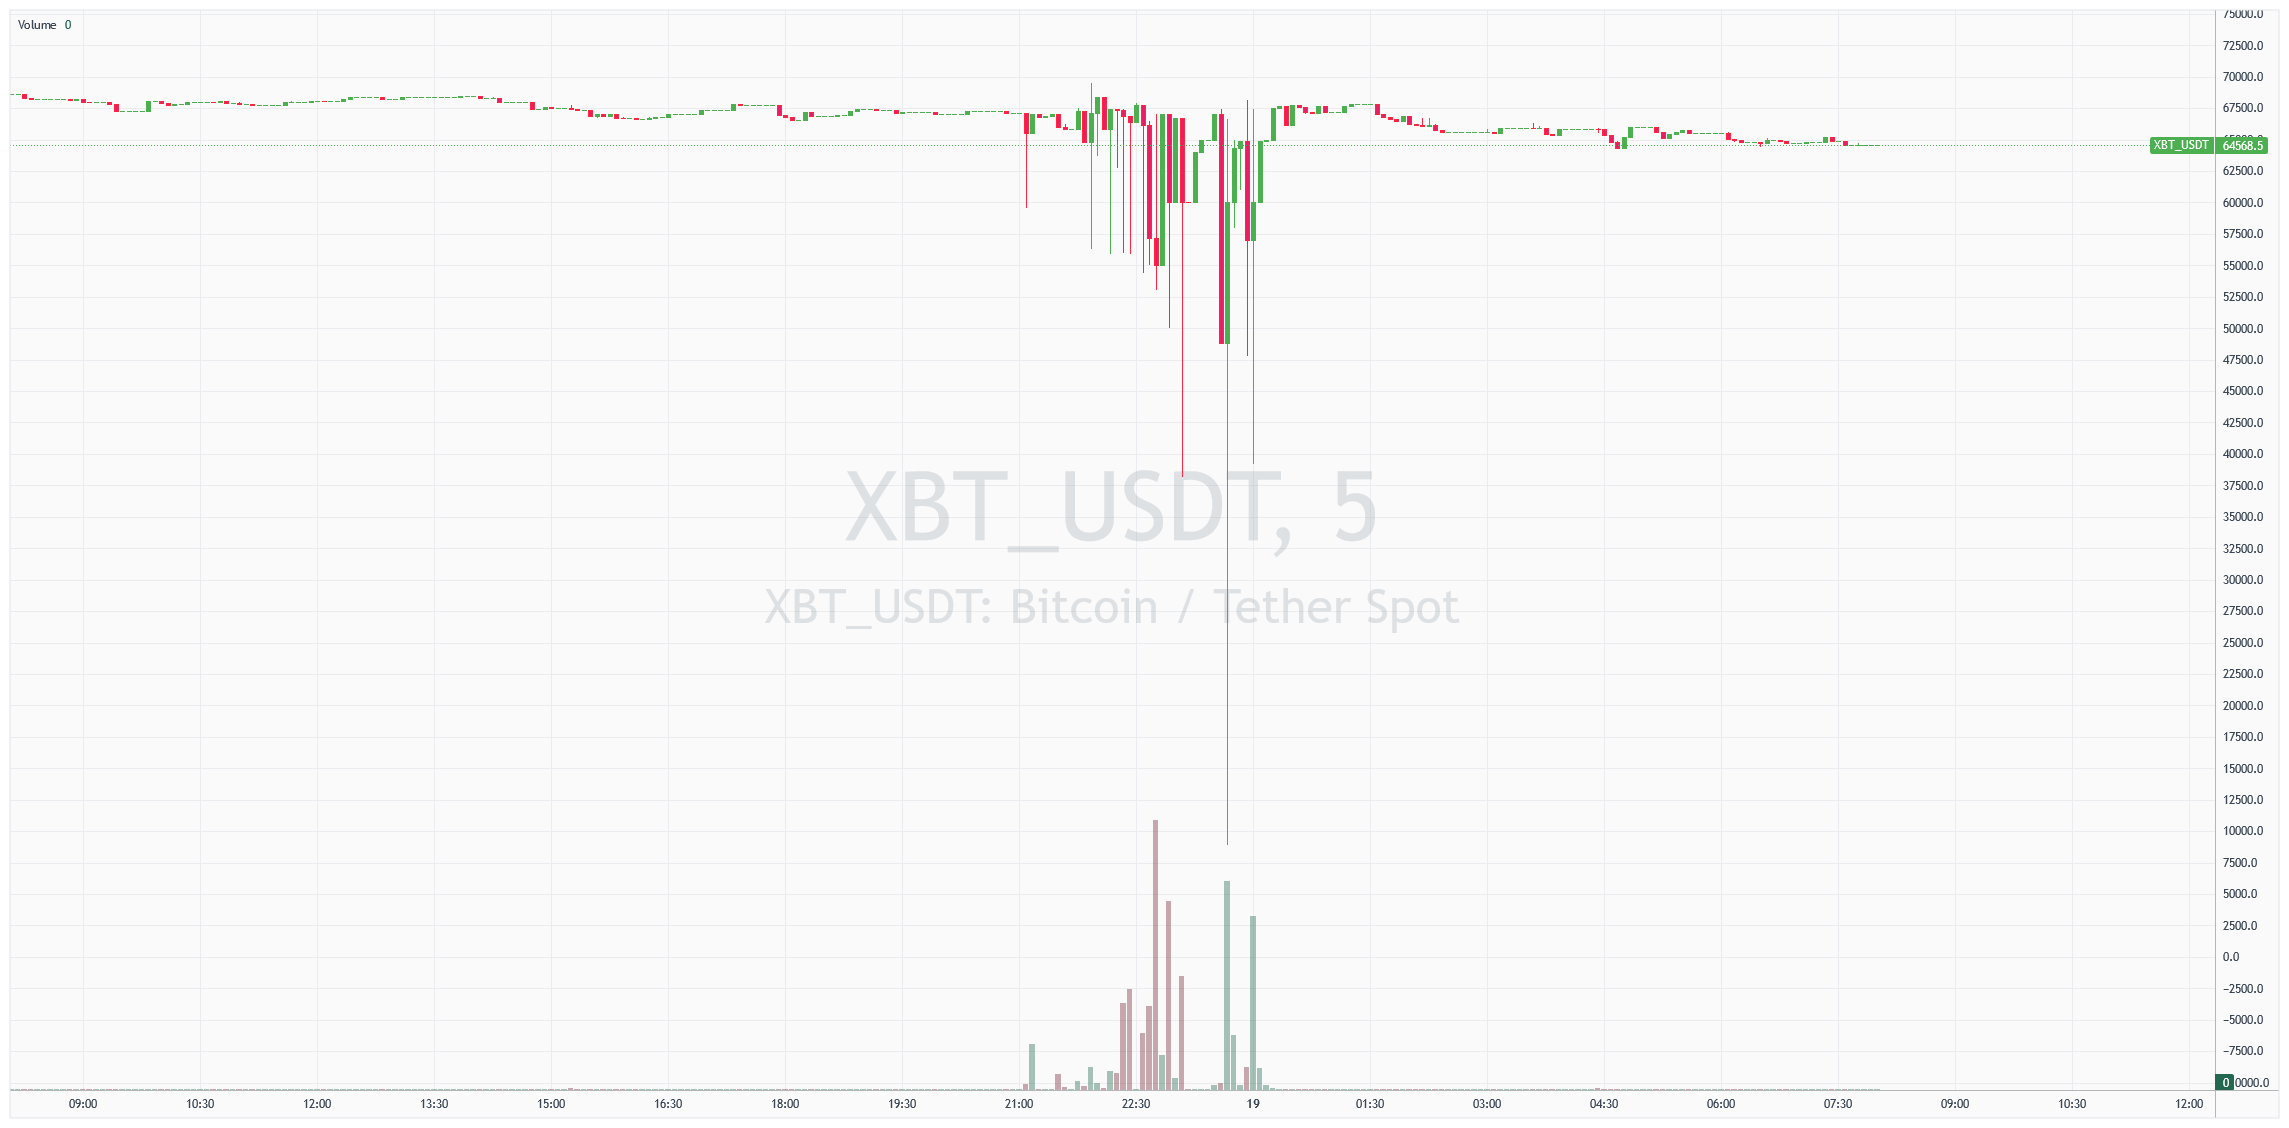 Bitcoin 5D price chart Source: BitMEX platform